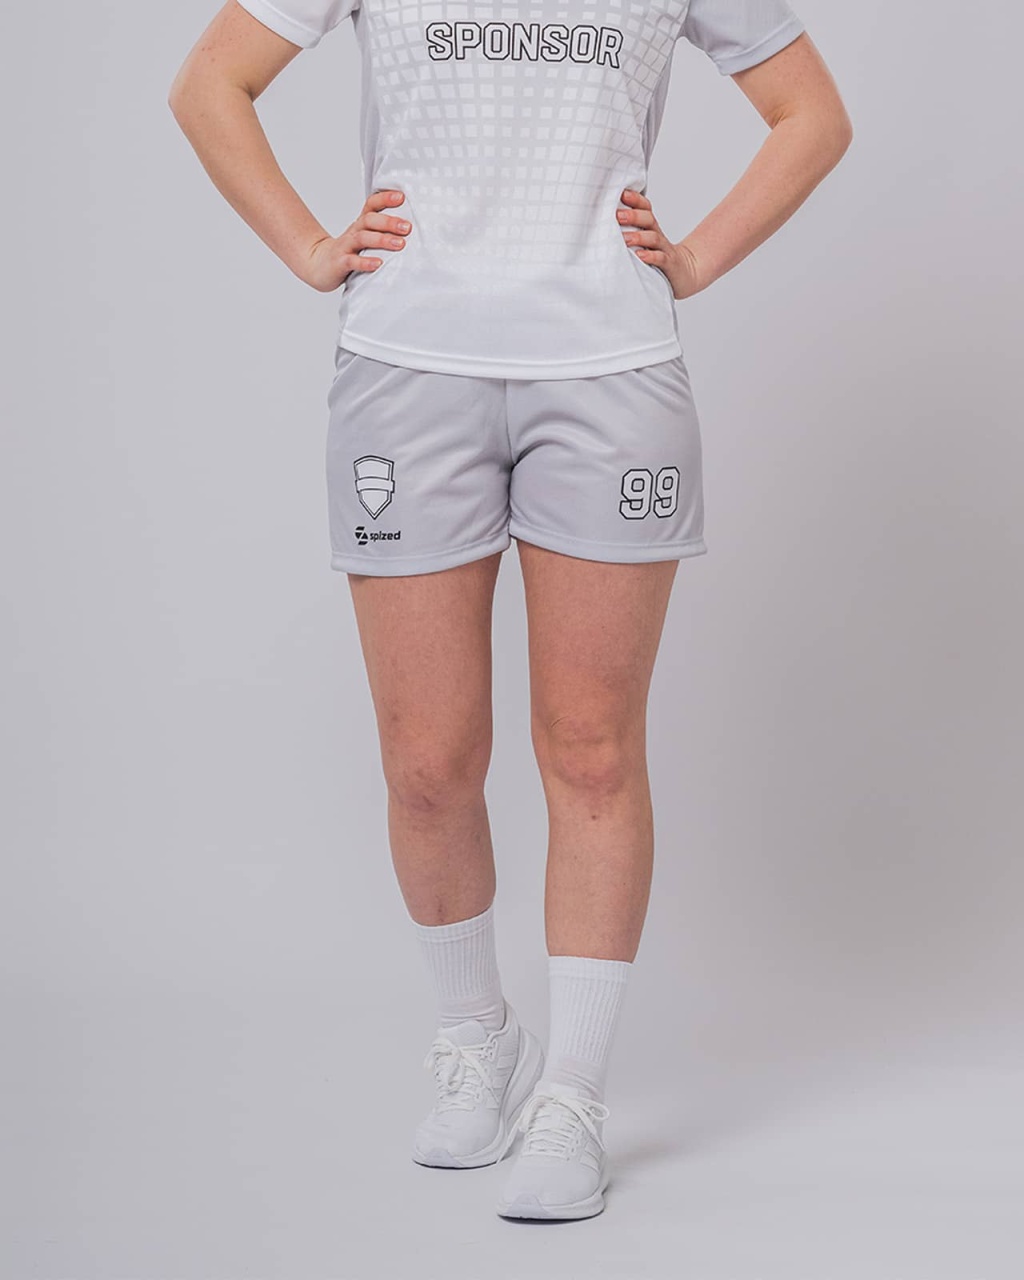 Aarhus women’s handball shorts